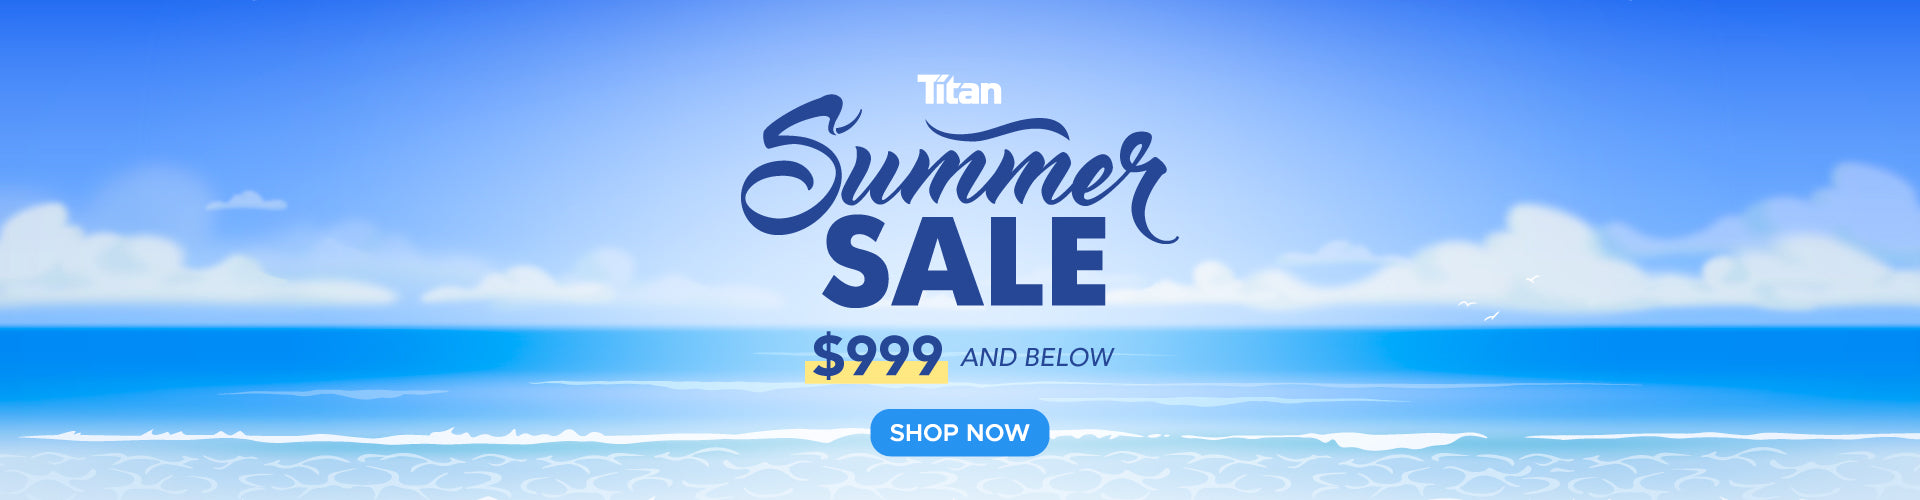 Titan Summer Sale, $999 and below, Shop now